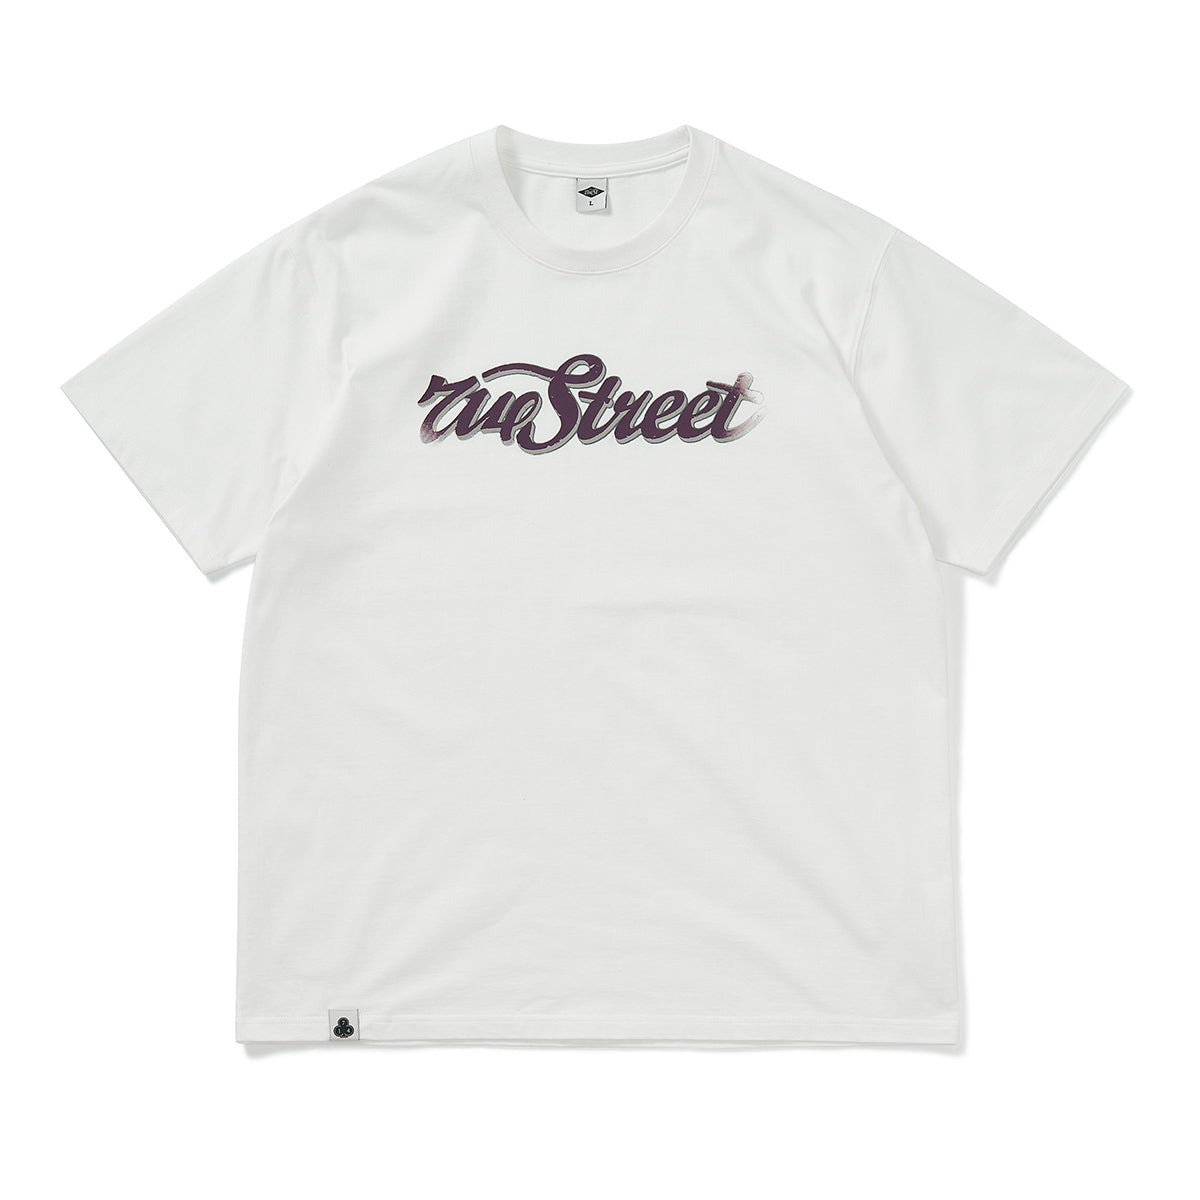 714STREET ロゴカラーTシャツ 714ST062